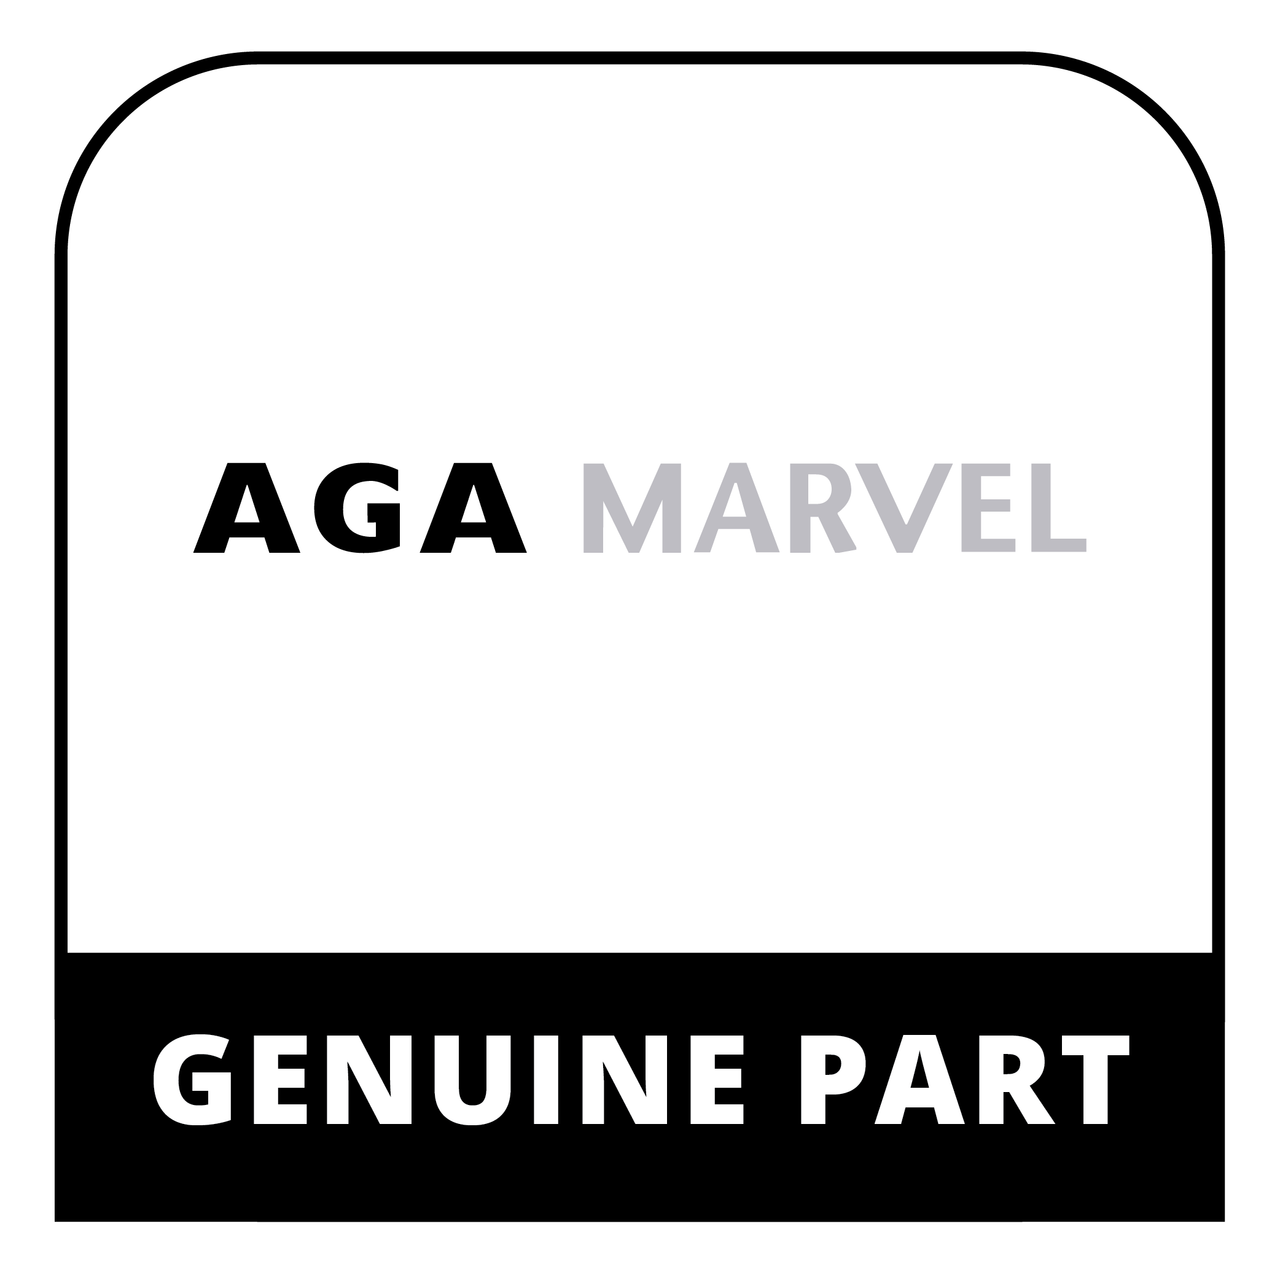 AGA Marvel C1948 - D00005Axx - L/Wen Brn N.G - Genuine AGA Marvel Part